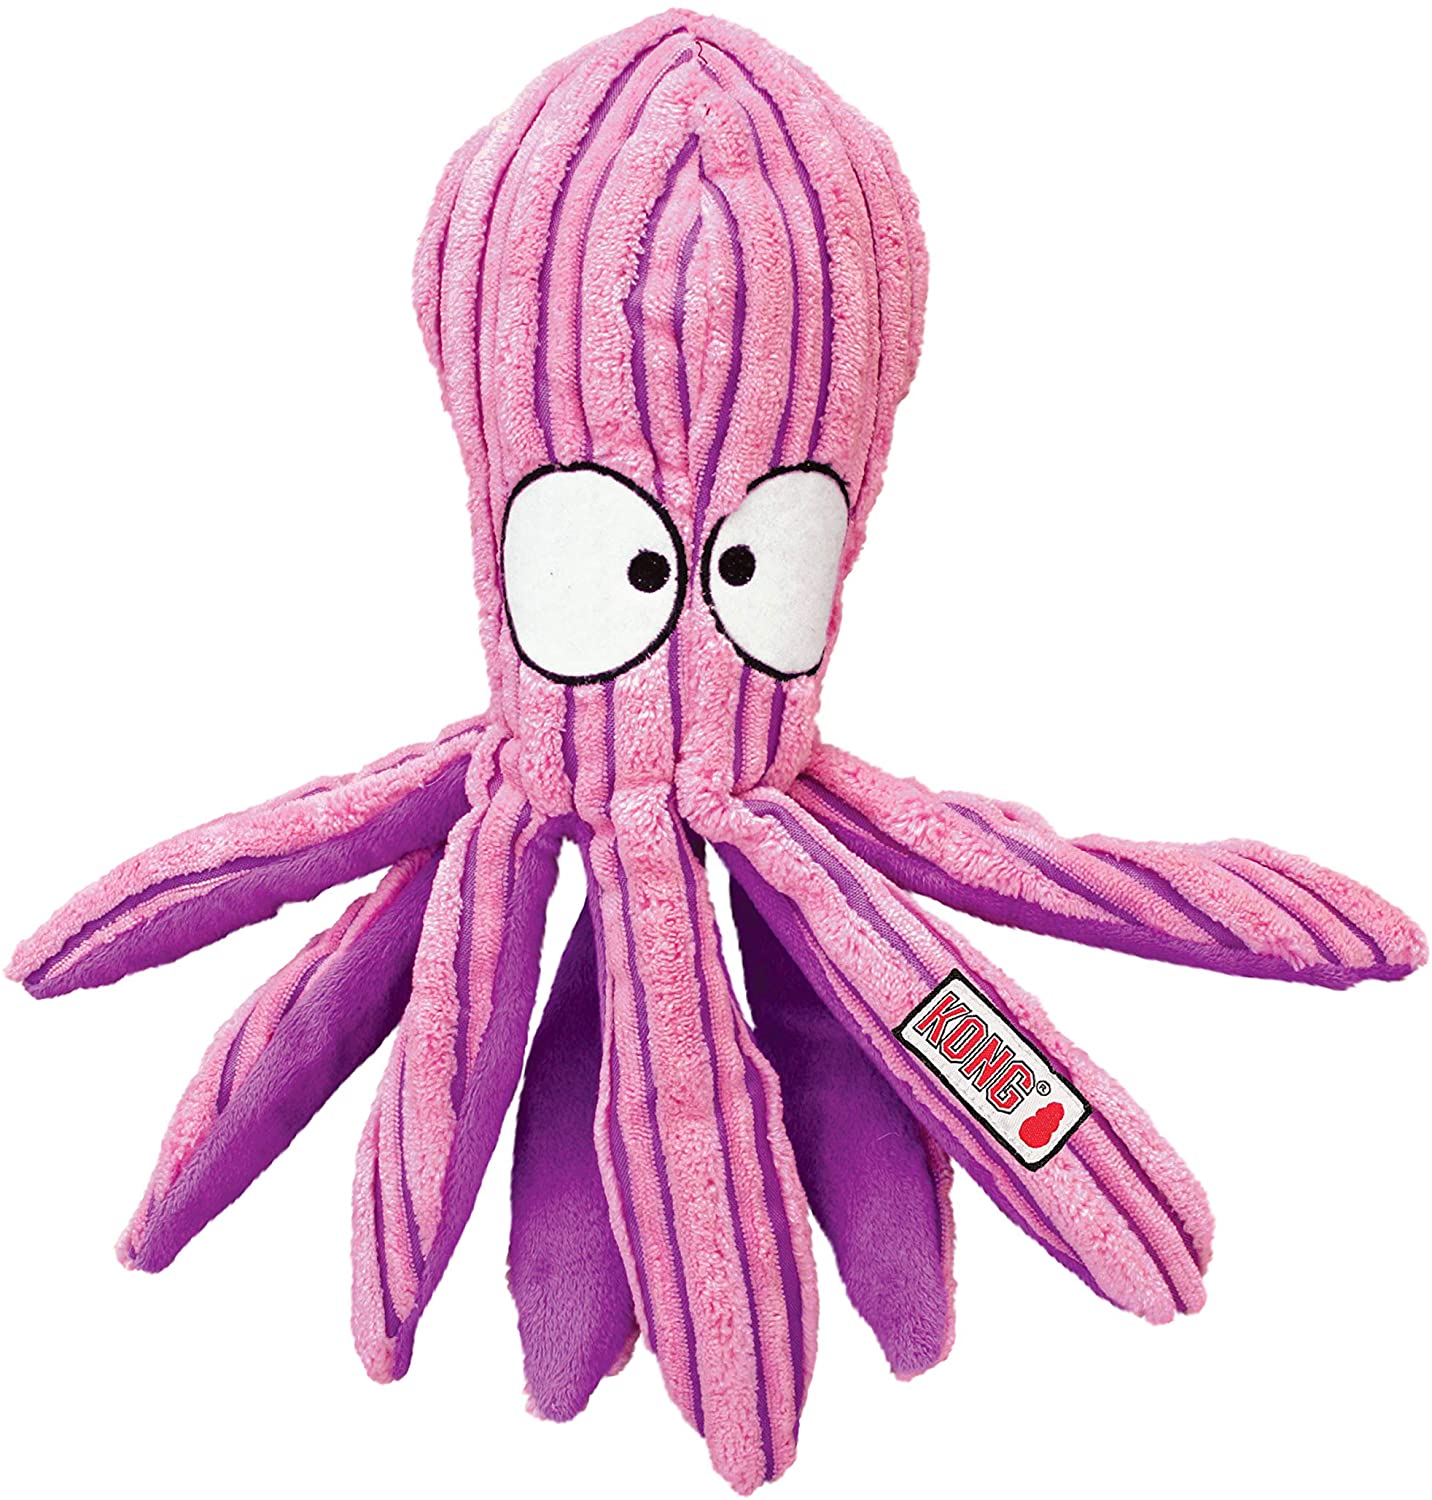  KONG - CuteSeas™ Octopus - Peluche de pana para perros - Raza grande 